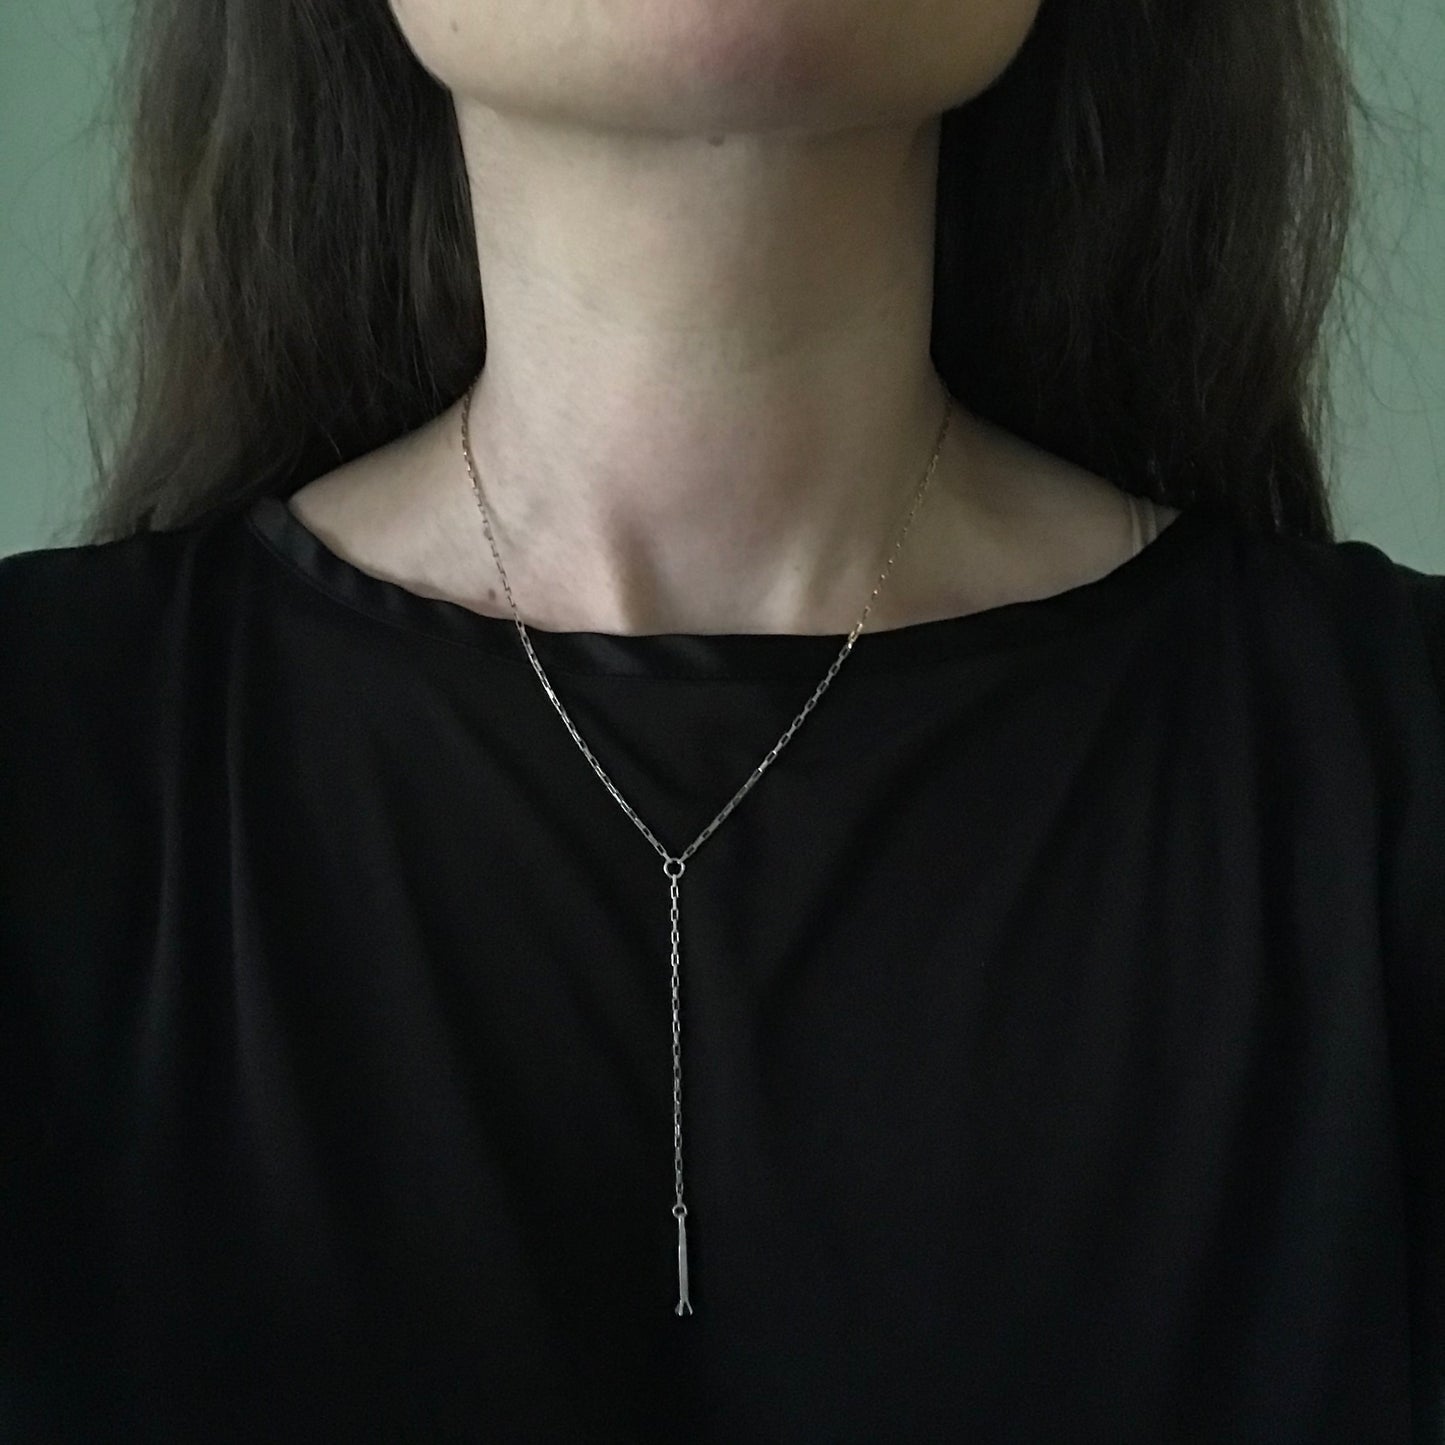 Sapphire Lariat Necklace